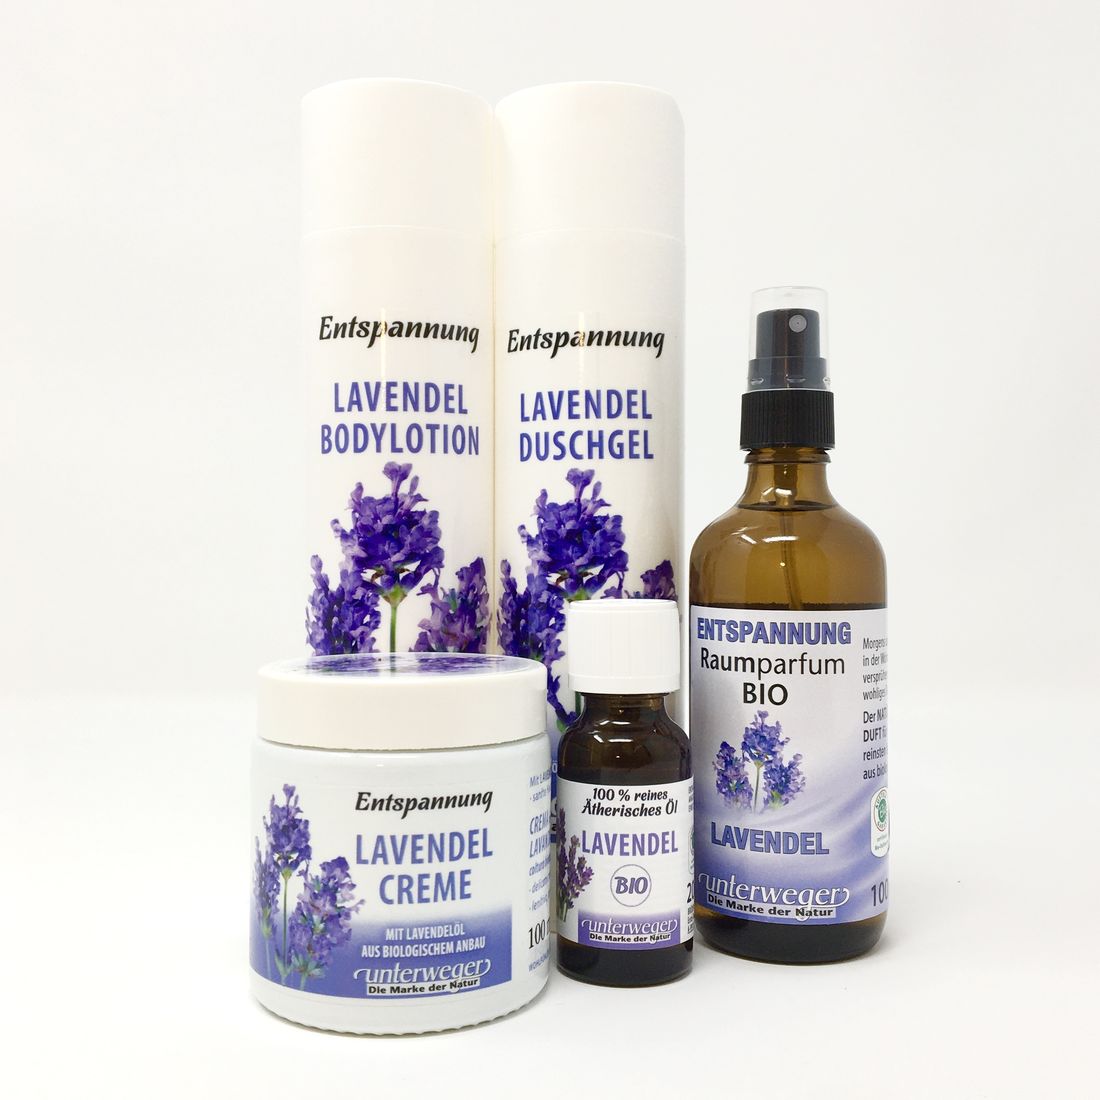 Unterweger ENTSPANNUNG Lavendel/Bodylotion/250 ml